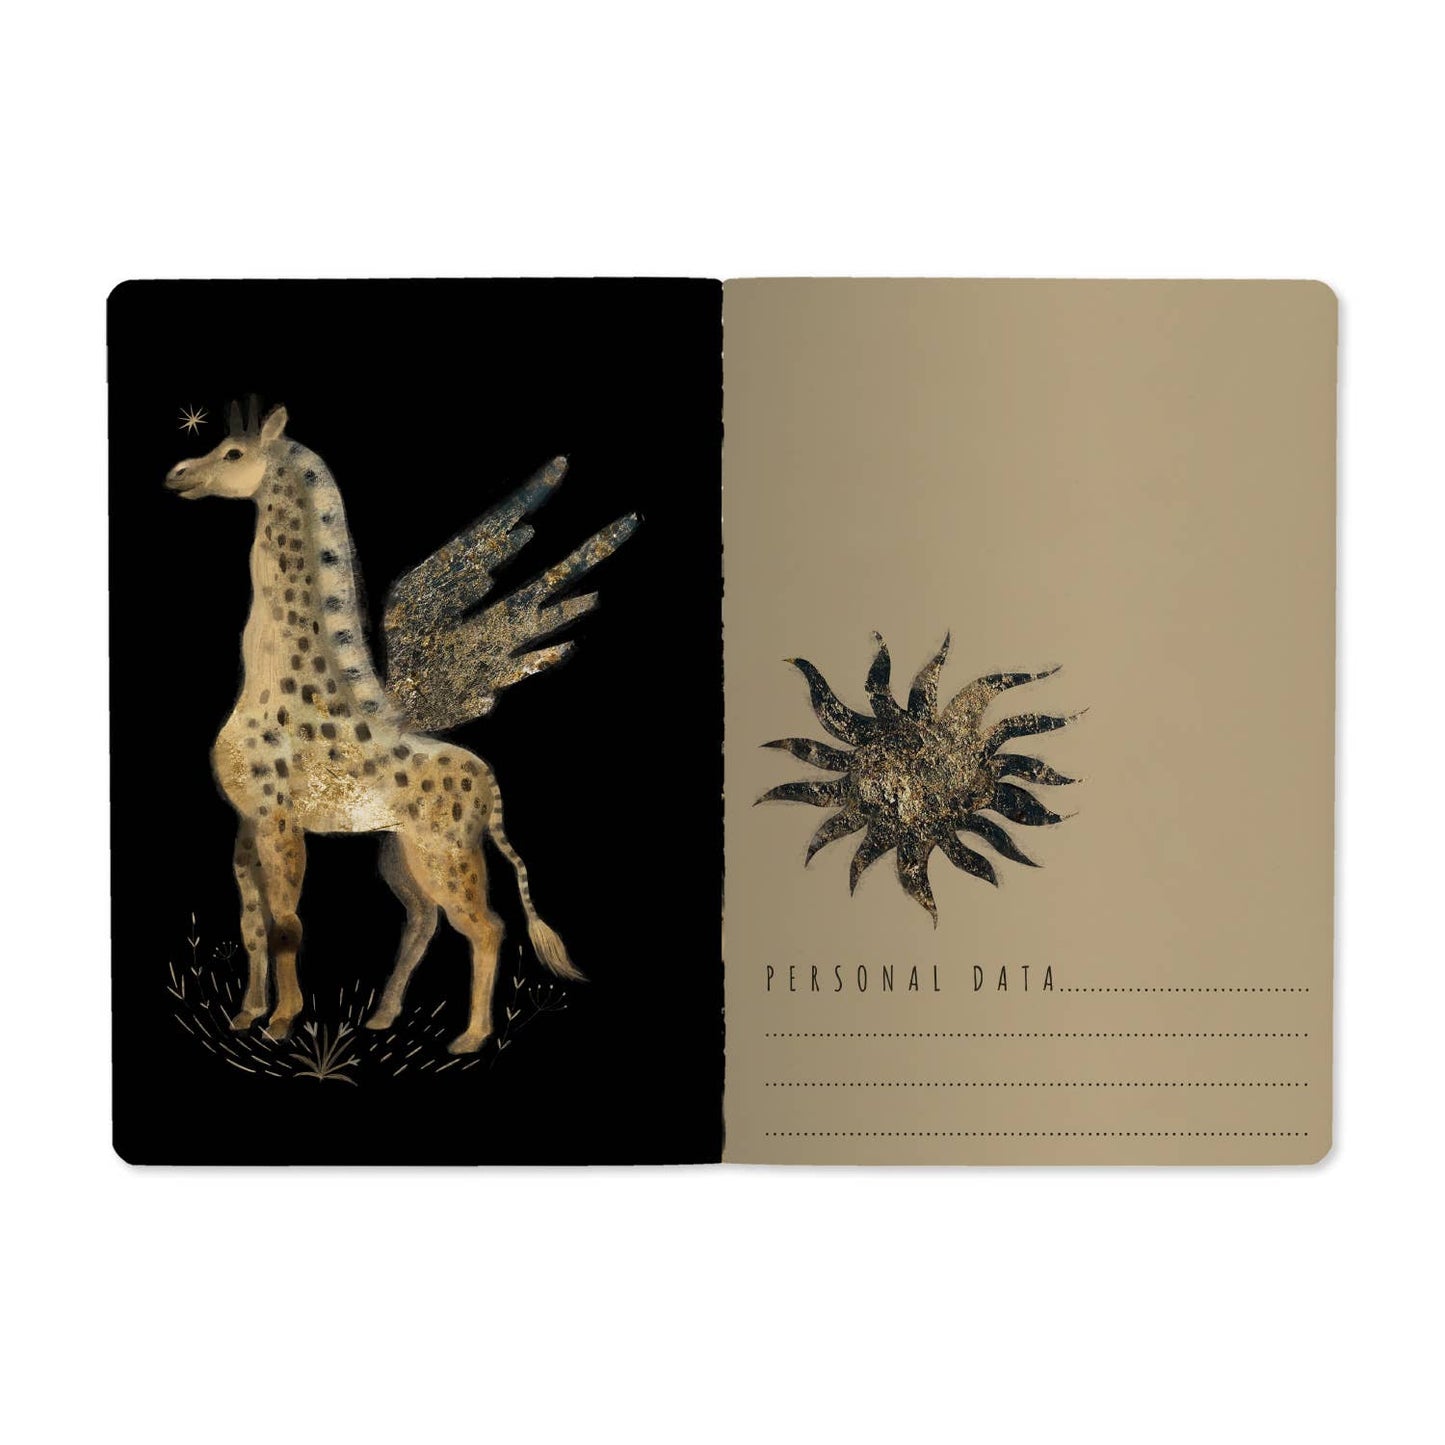 Fauna Fantasy Notebook